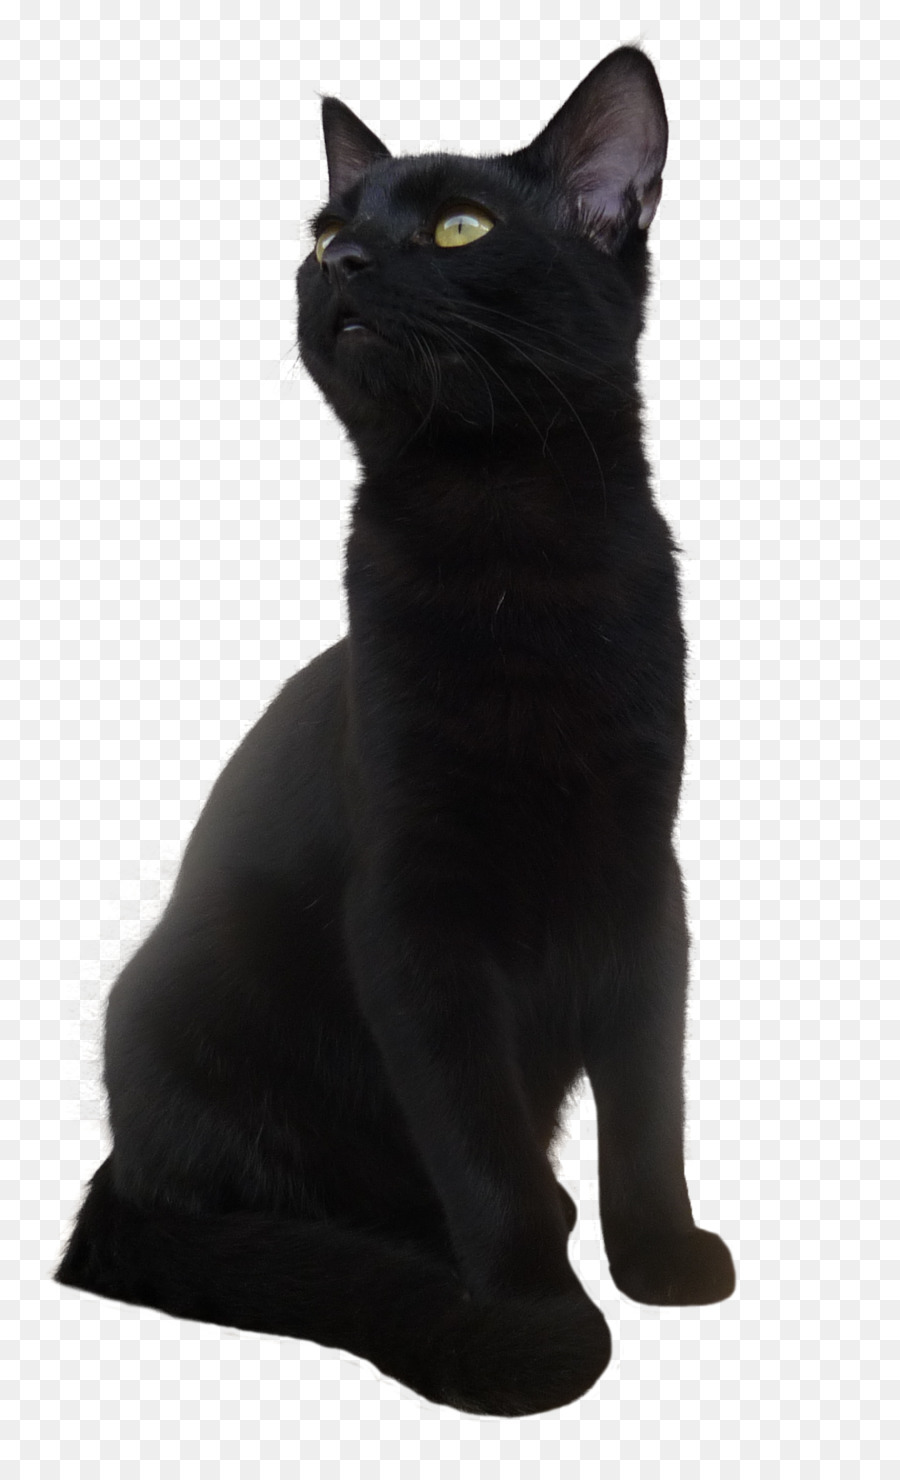 Bombay cat Korat European shorthair Black cat - Black Cat PNG Transparent Picture png download - 1410*2295 - Free Transparent Cat png Download.